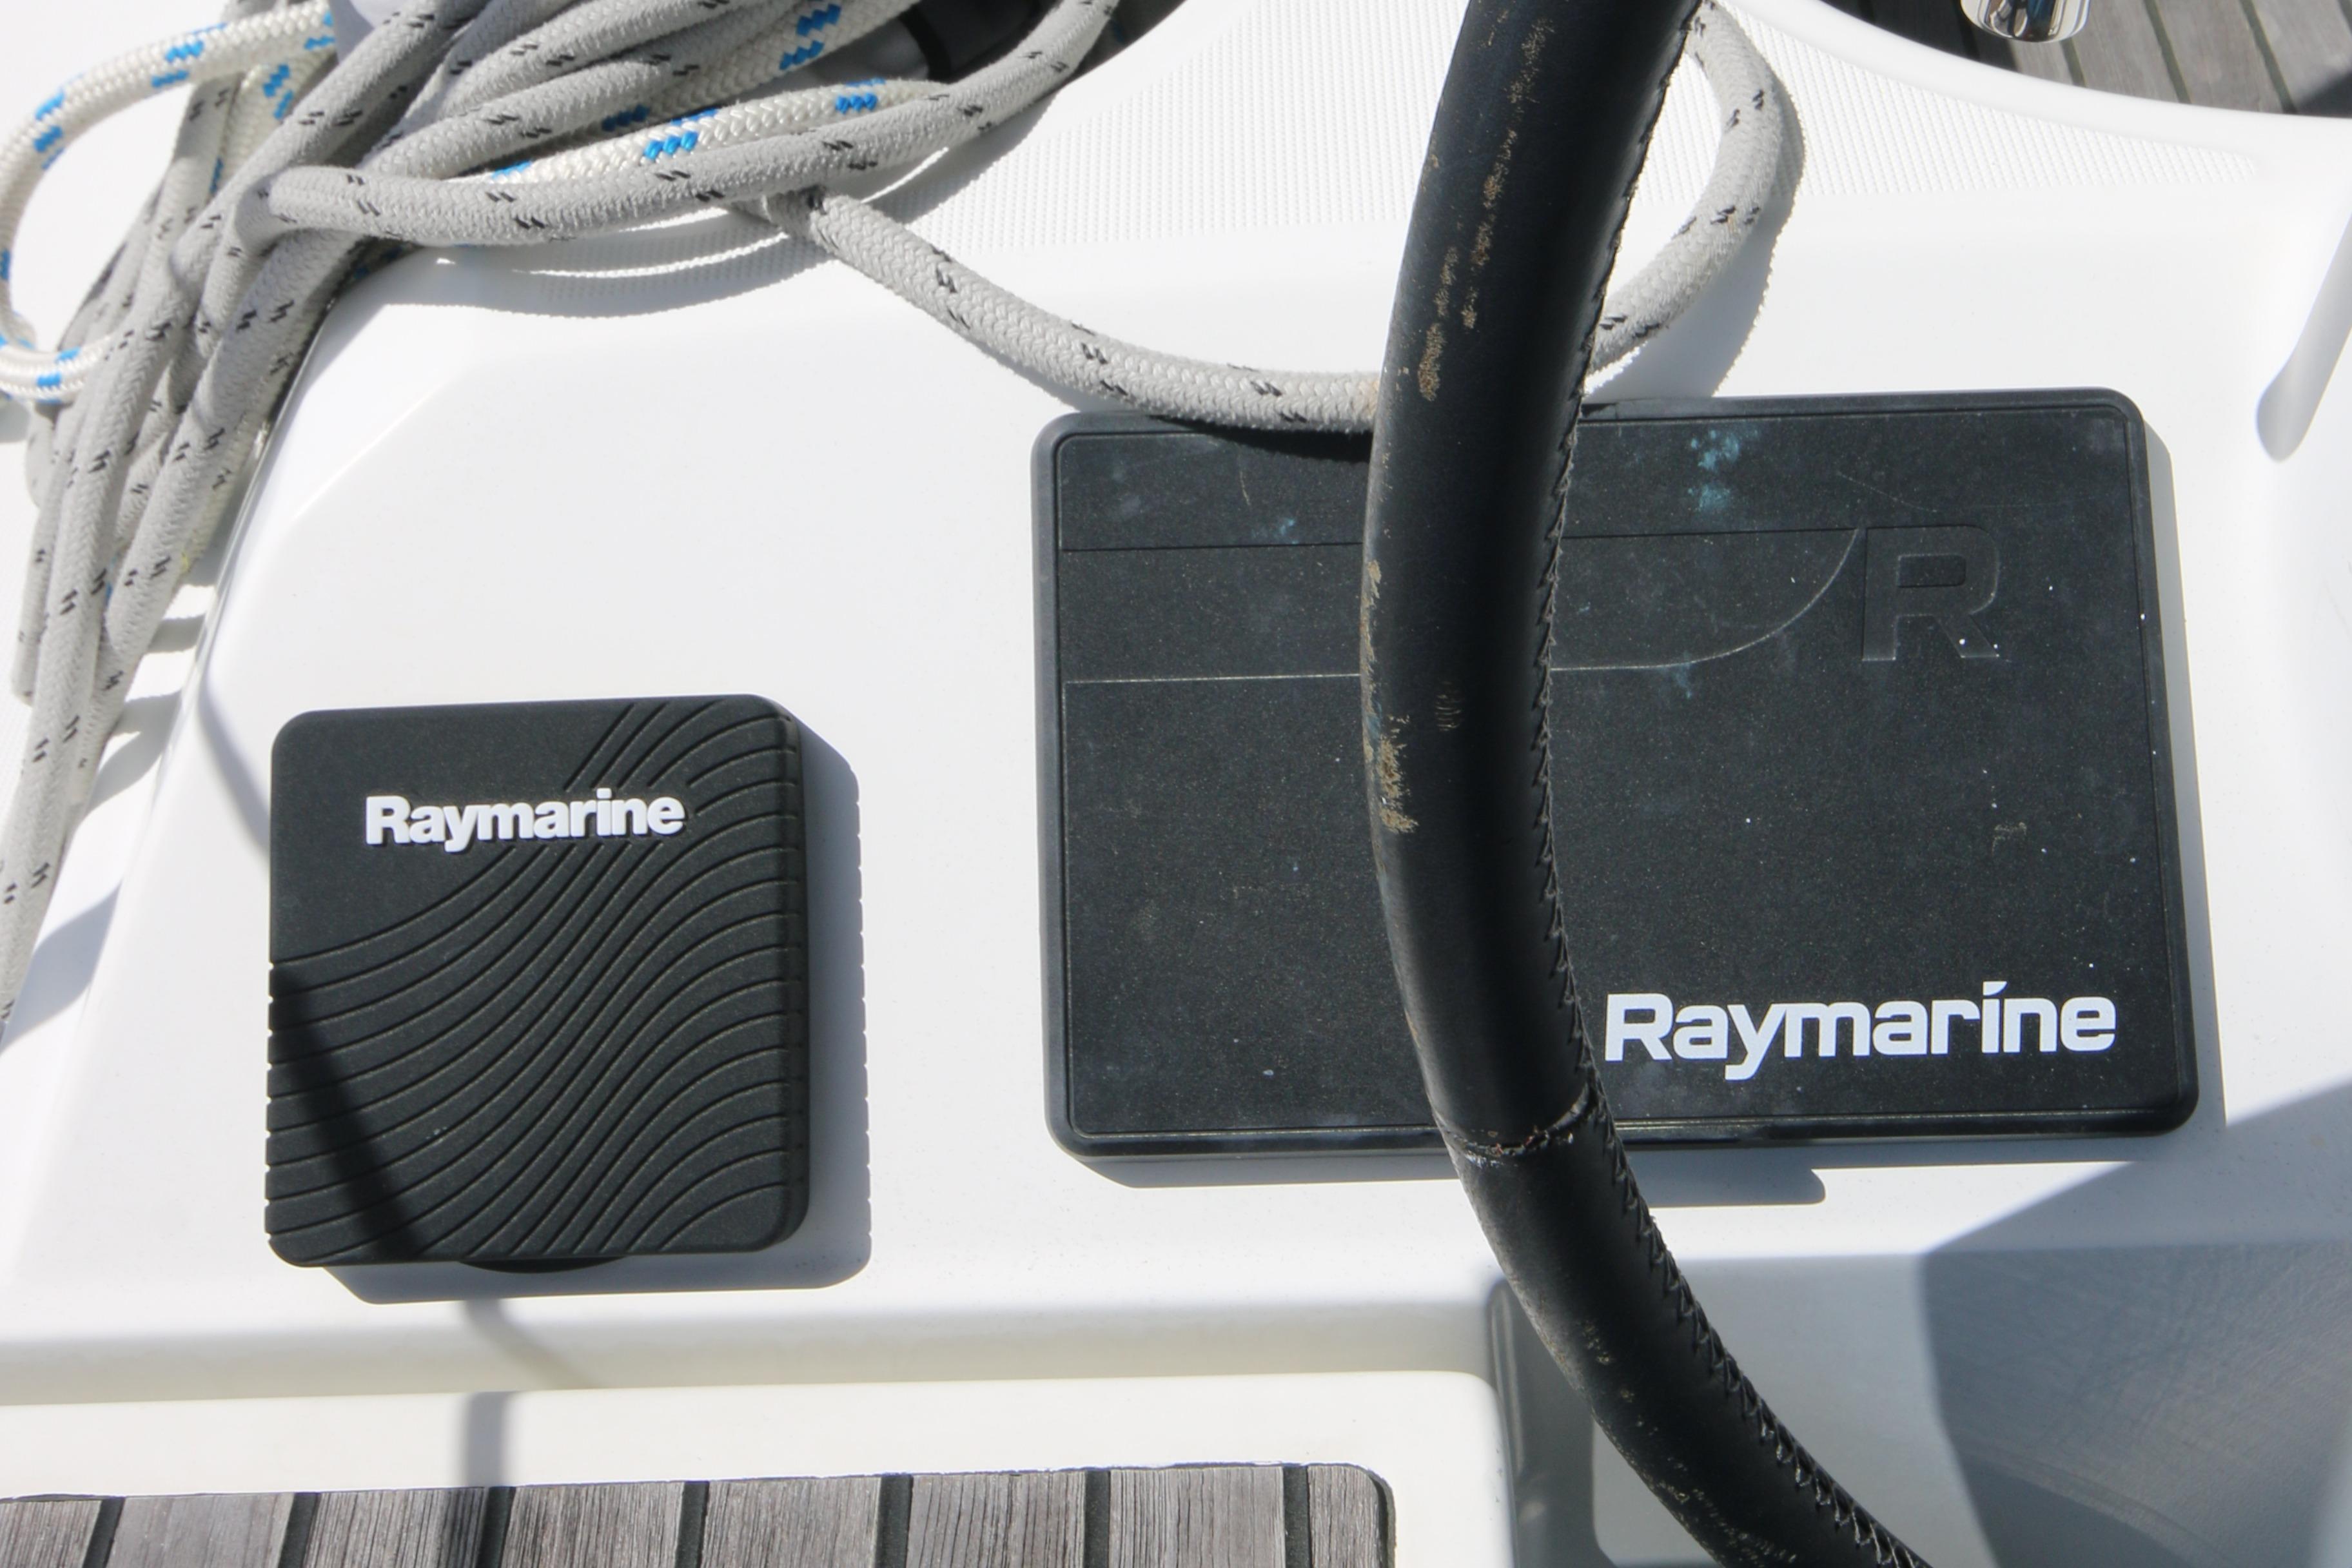 Raymarine touch screen electronics